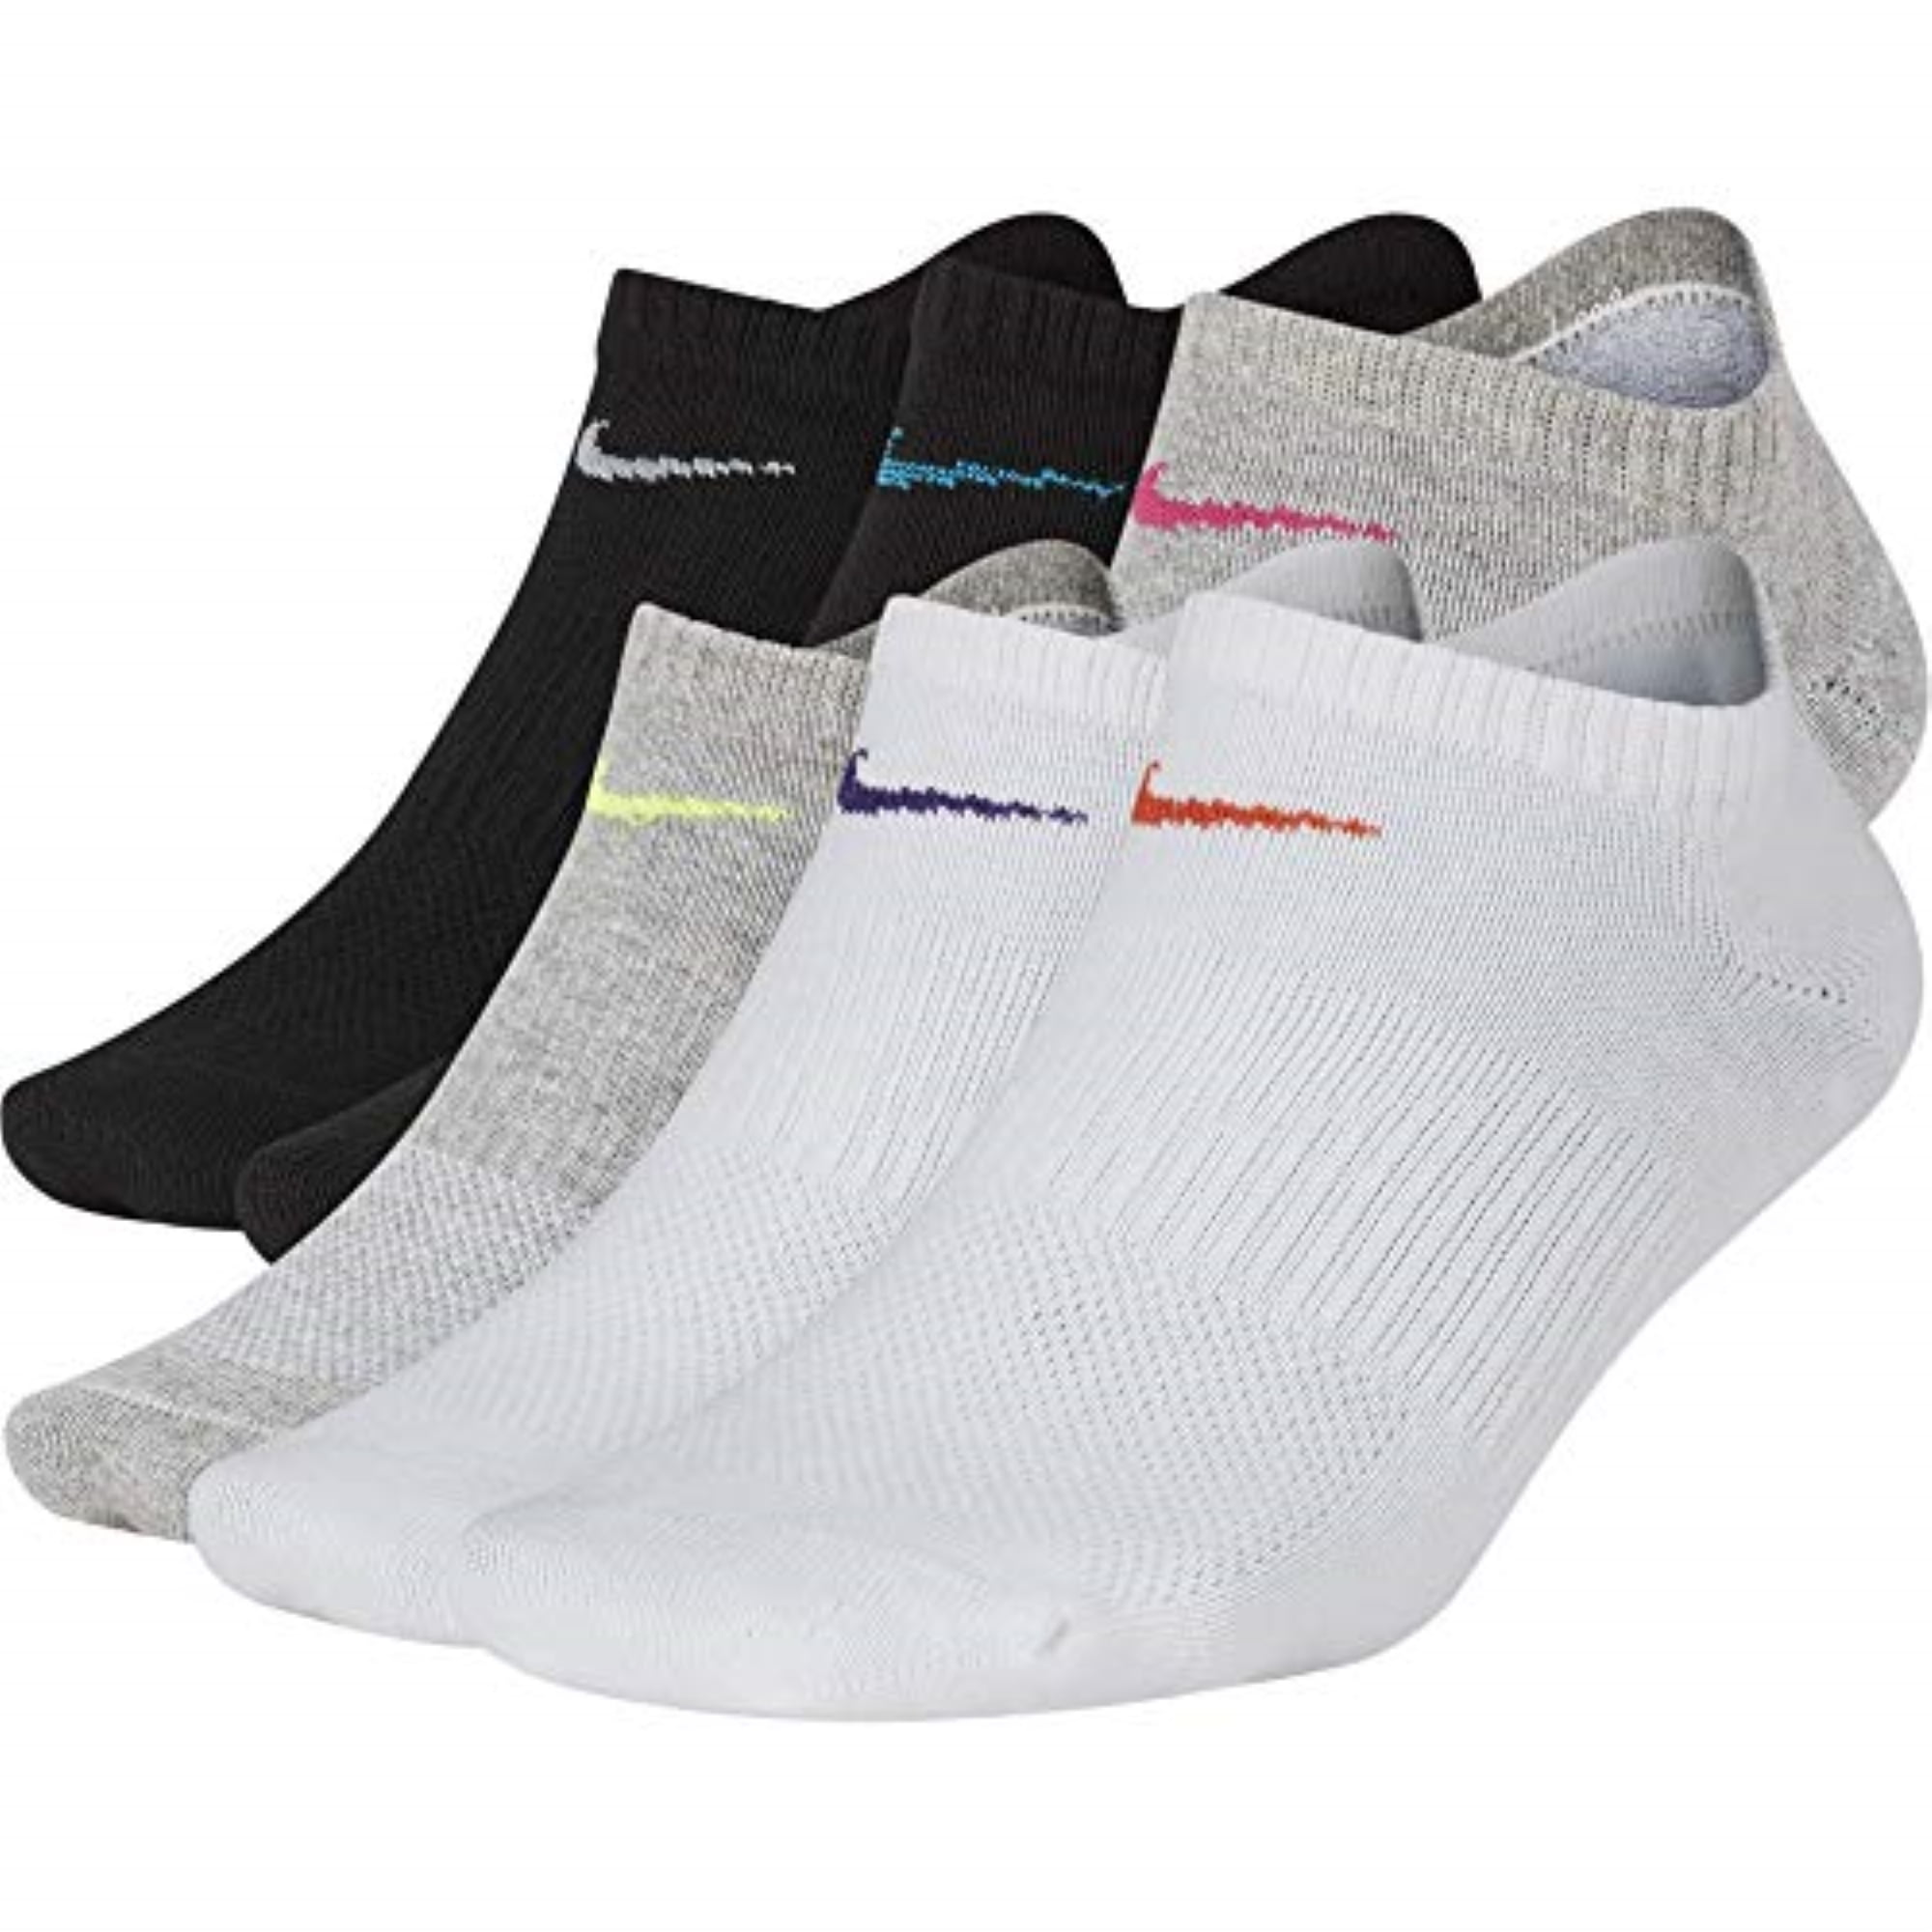 Nike Women's Everyday Lightweight No-Show Socks (6 Pair), Cool  Grey/Black/White, Medium - Walmart.com